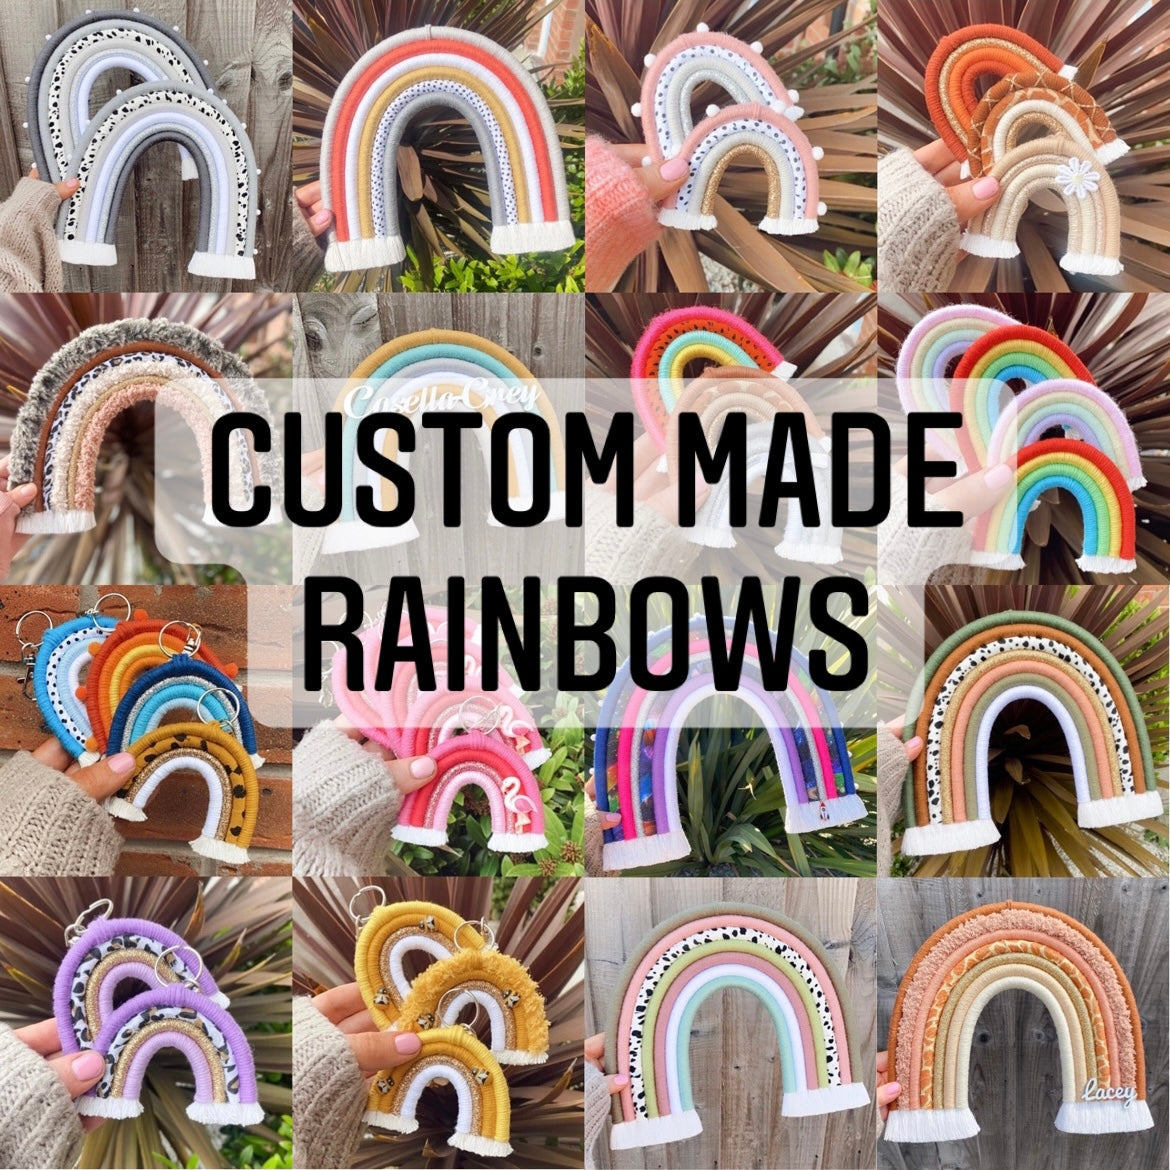 Custom made rainbows